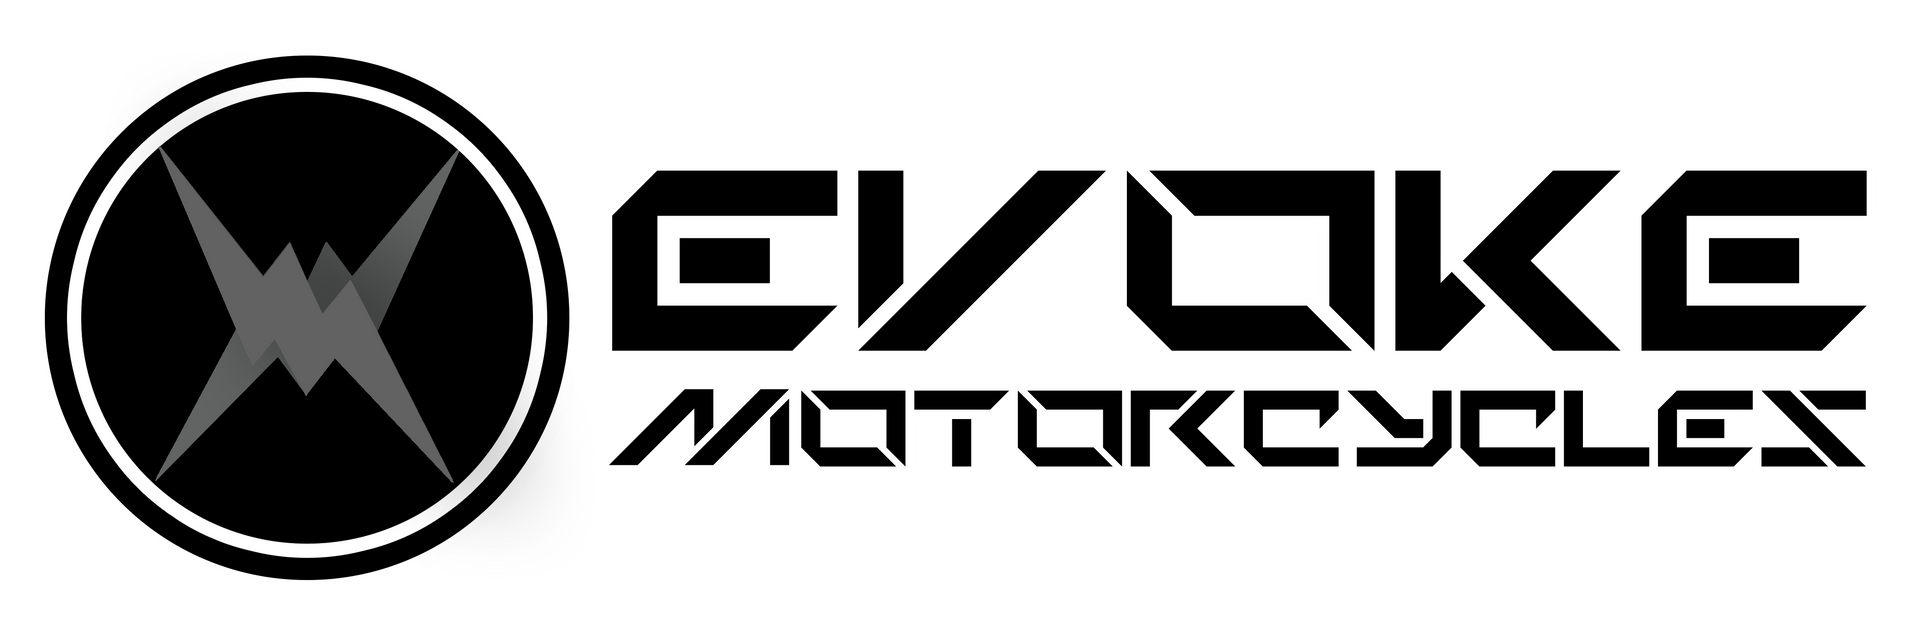 Evoke Motorcycles Logo and loading